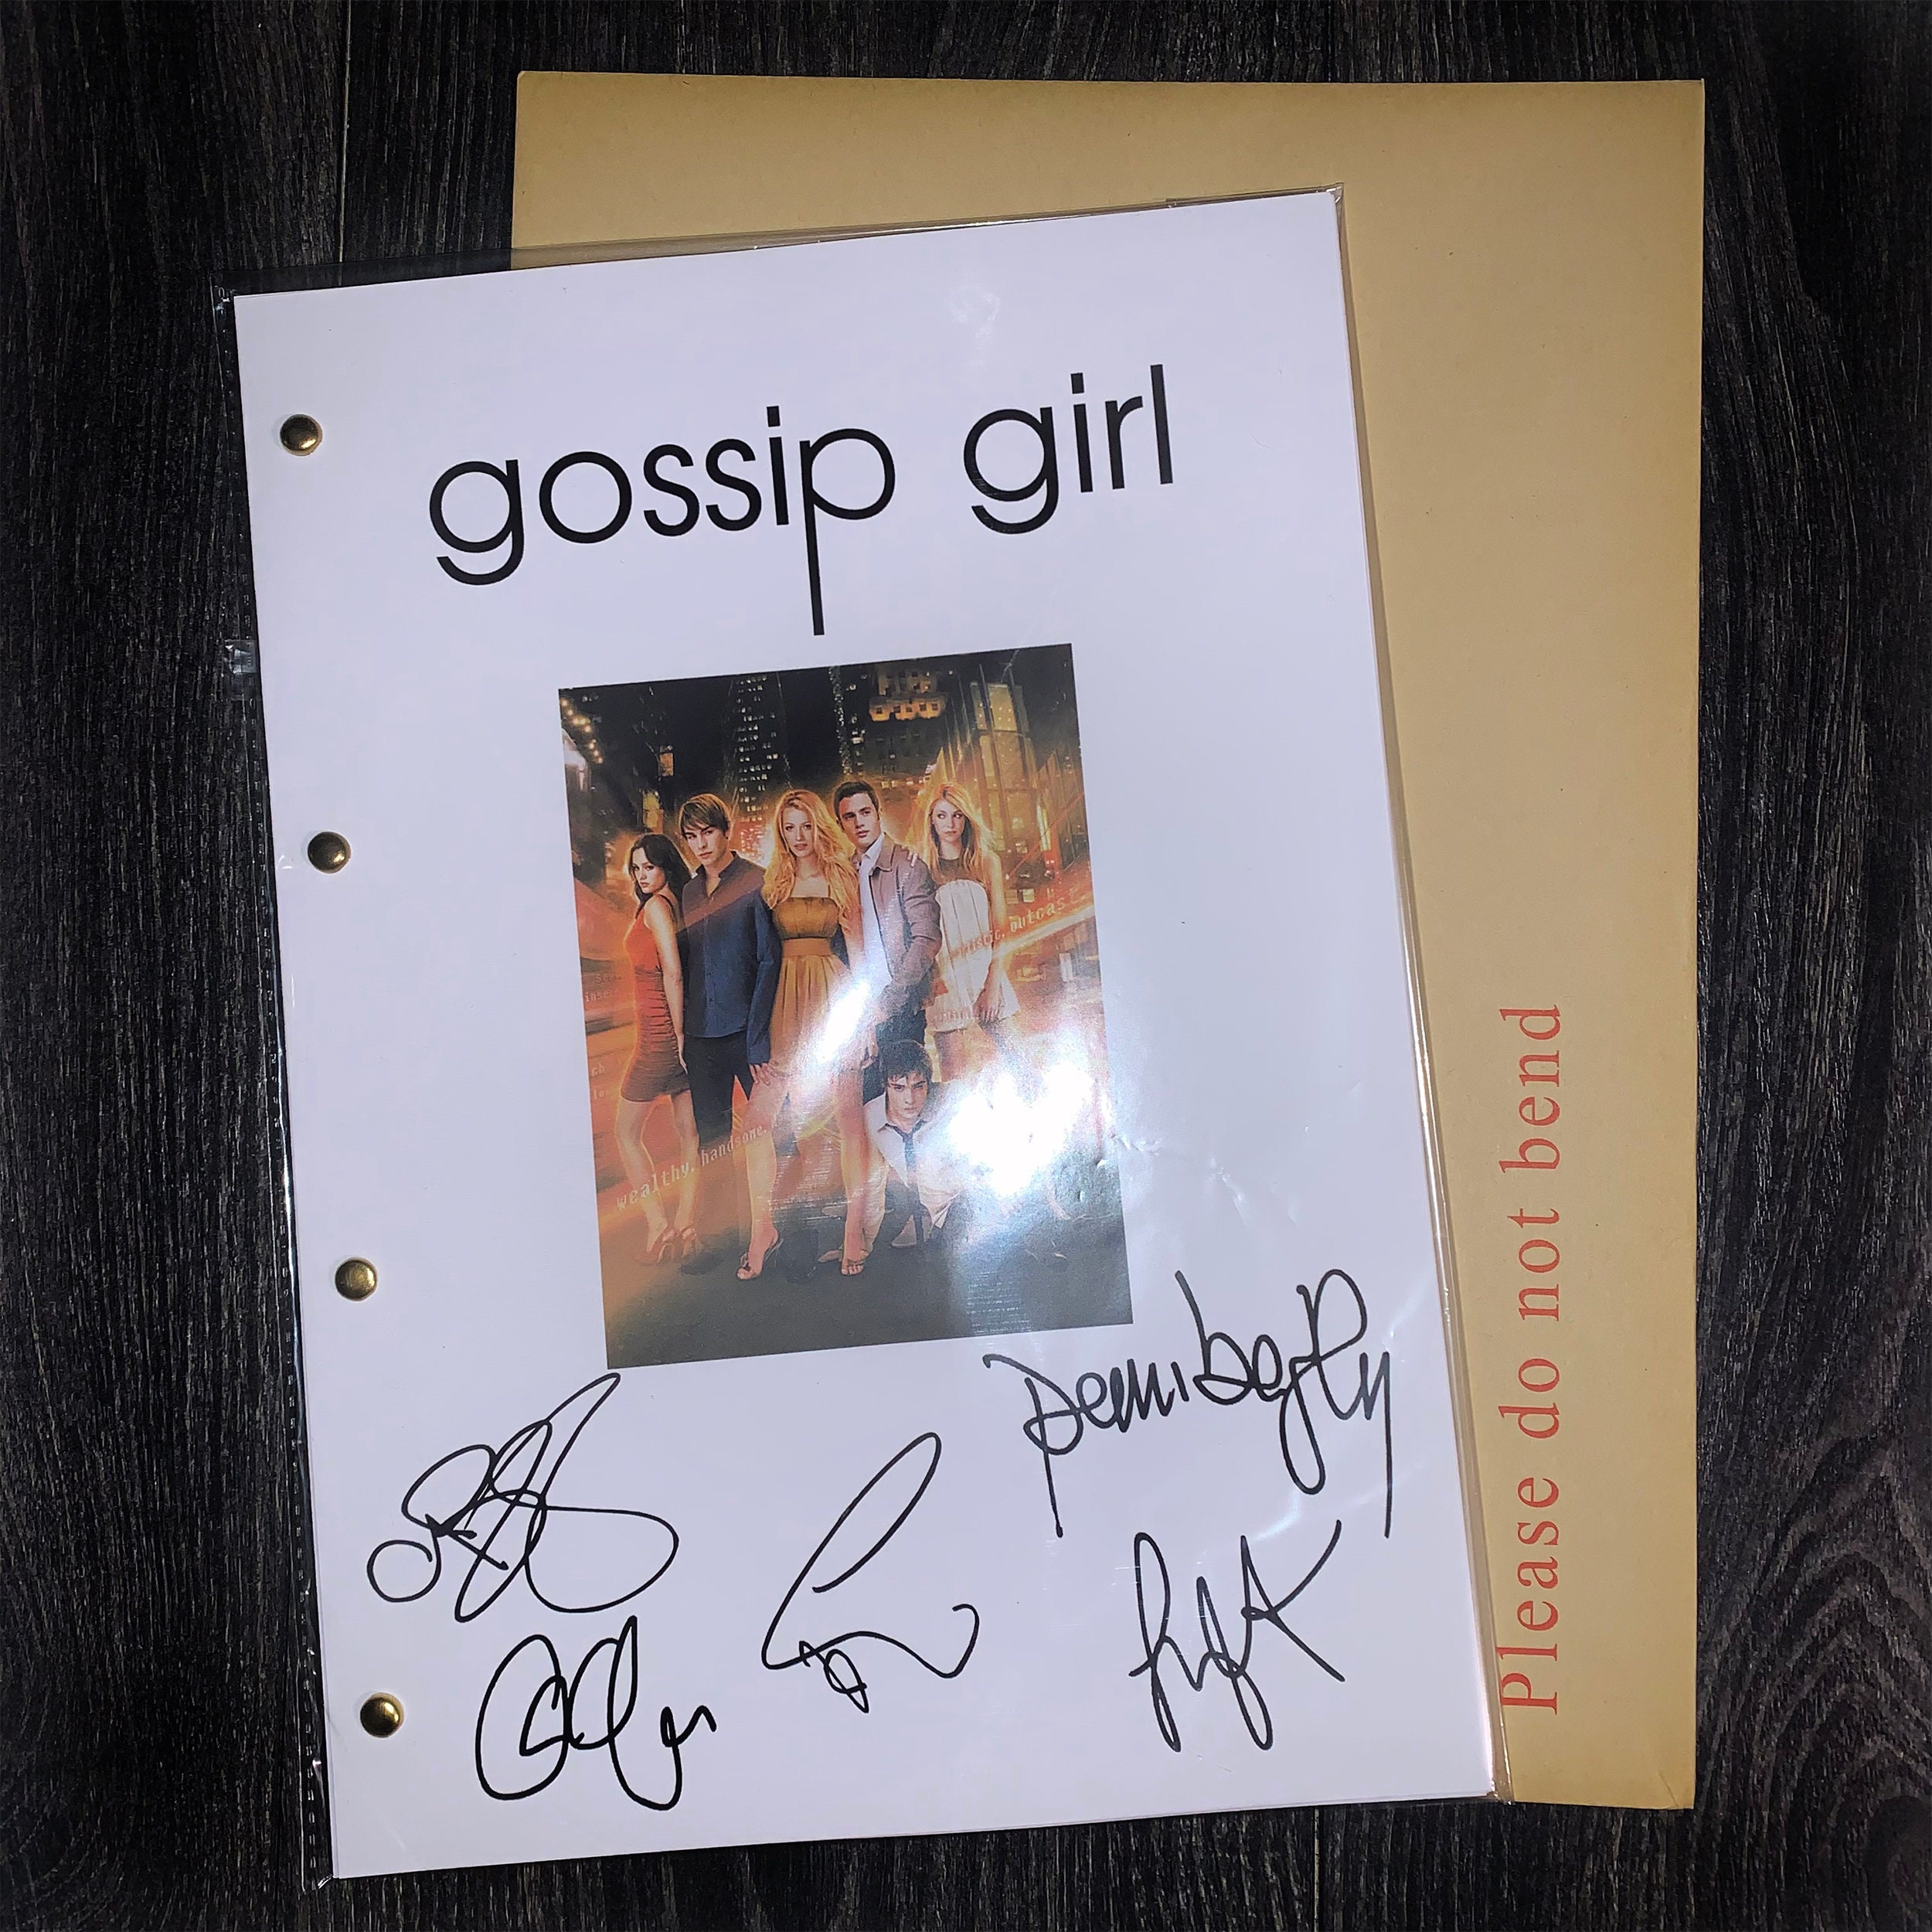 BLAKE LIVELY signed autographed GOSSIP GIRL SERENA VAN DER WOODSEN 8x10  photo